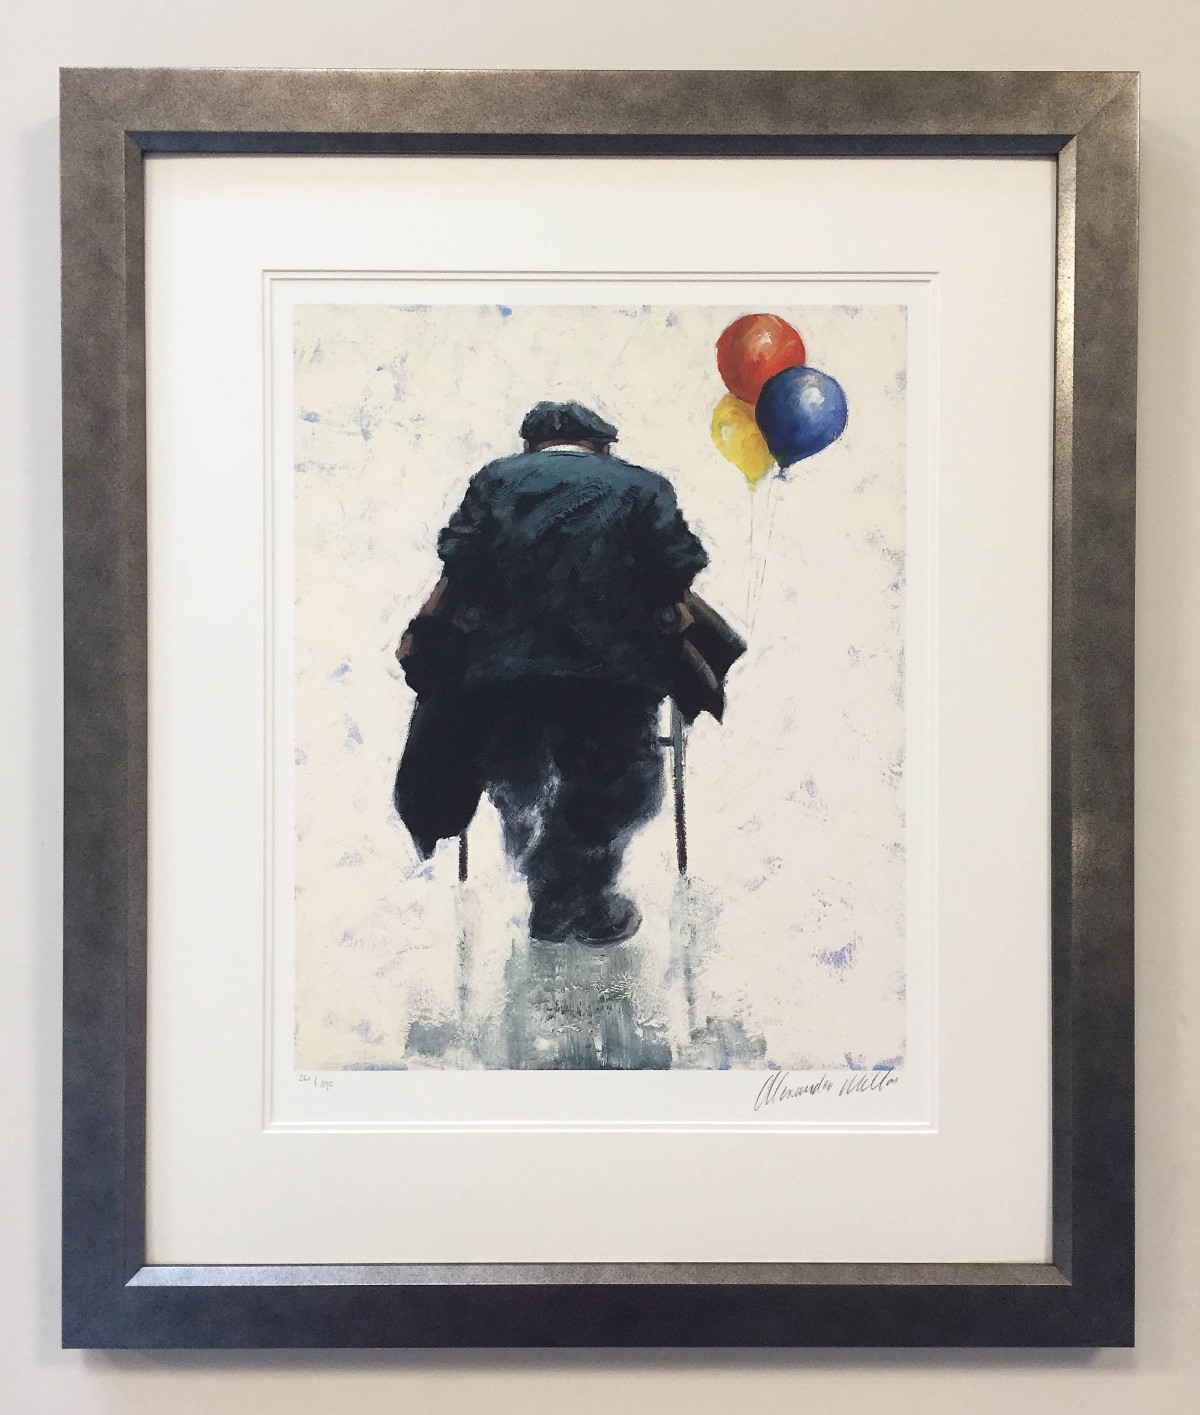 The Balloon Seller by Alexander Millar